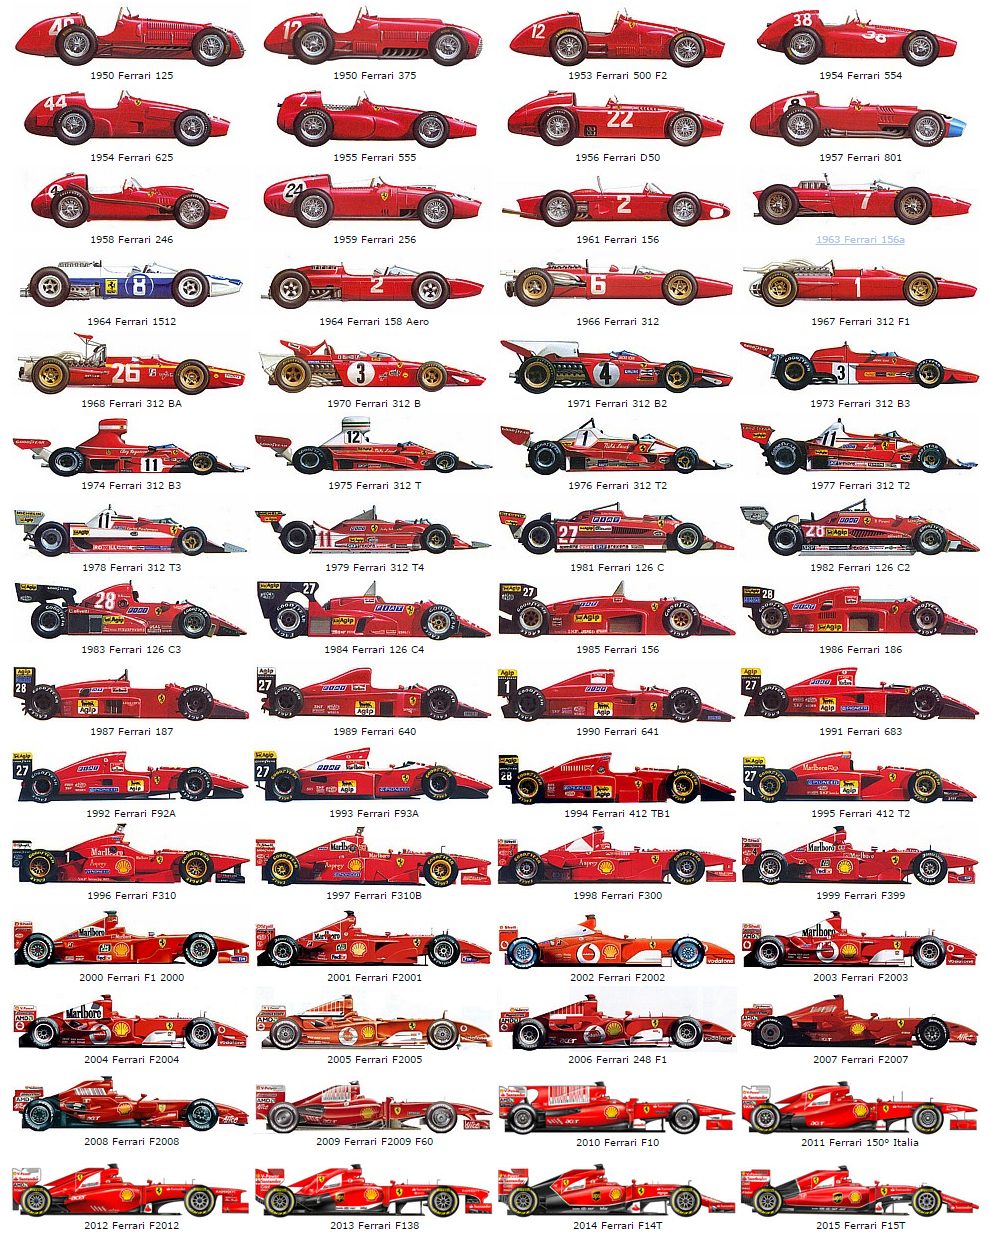 The history of Ferrari F1 cars